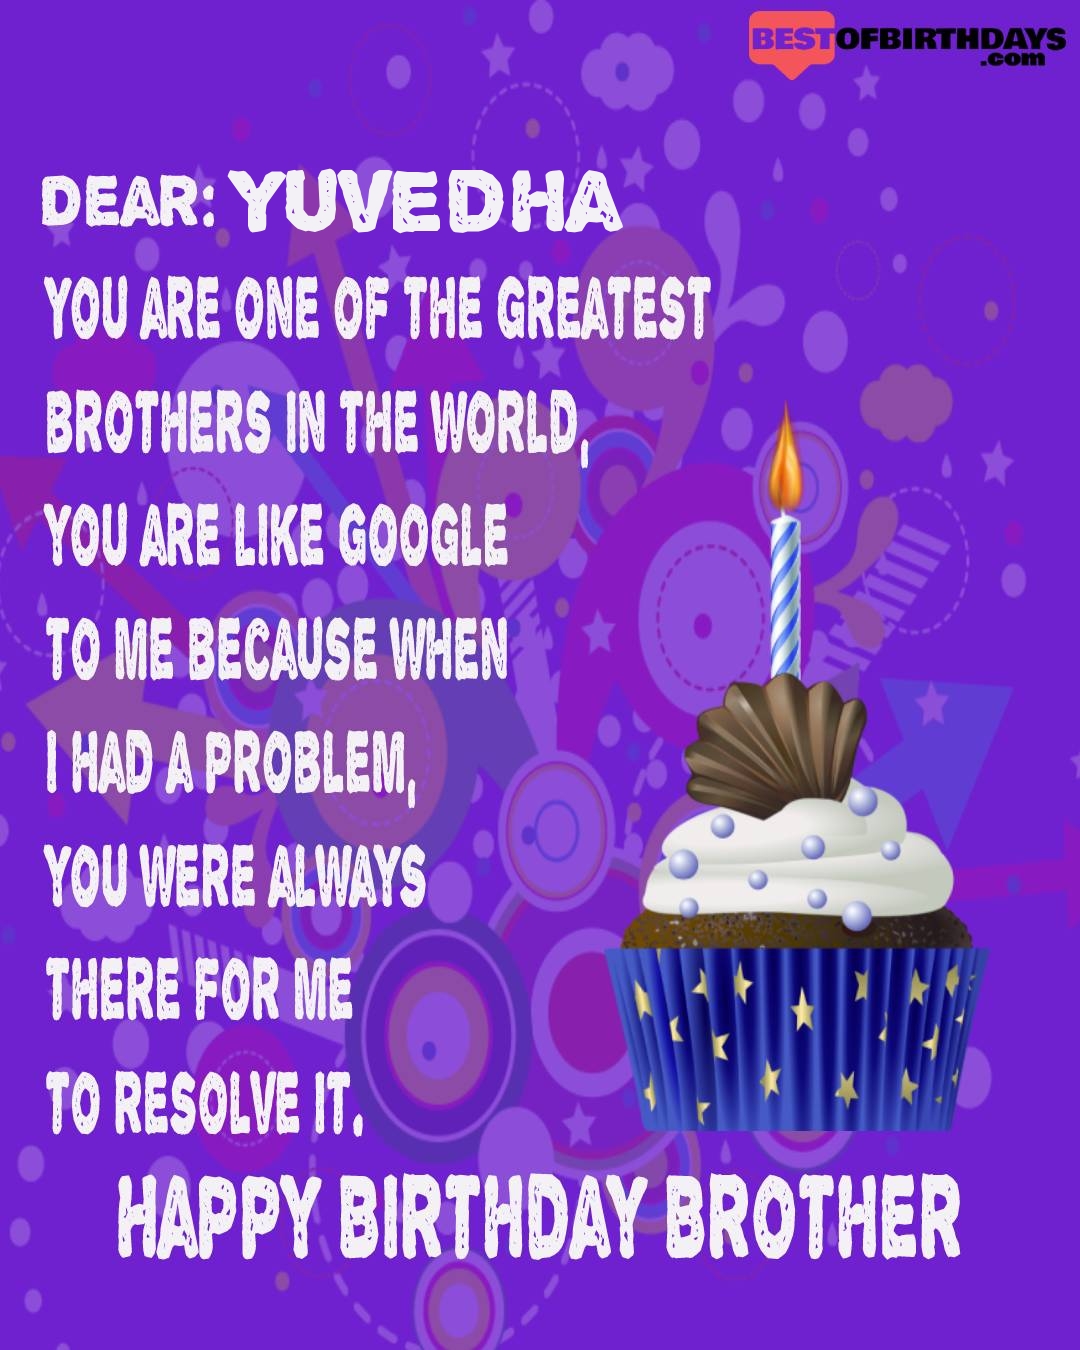 Happy birthday yuvedha bhai brother bro